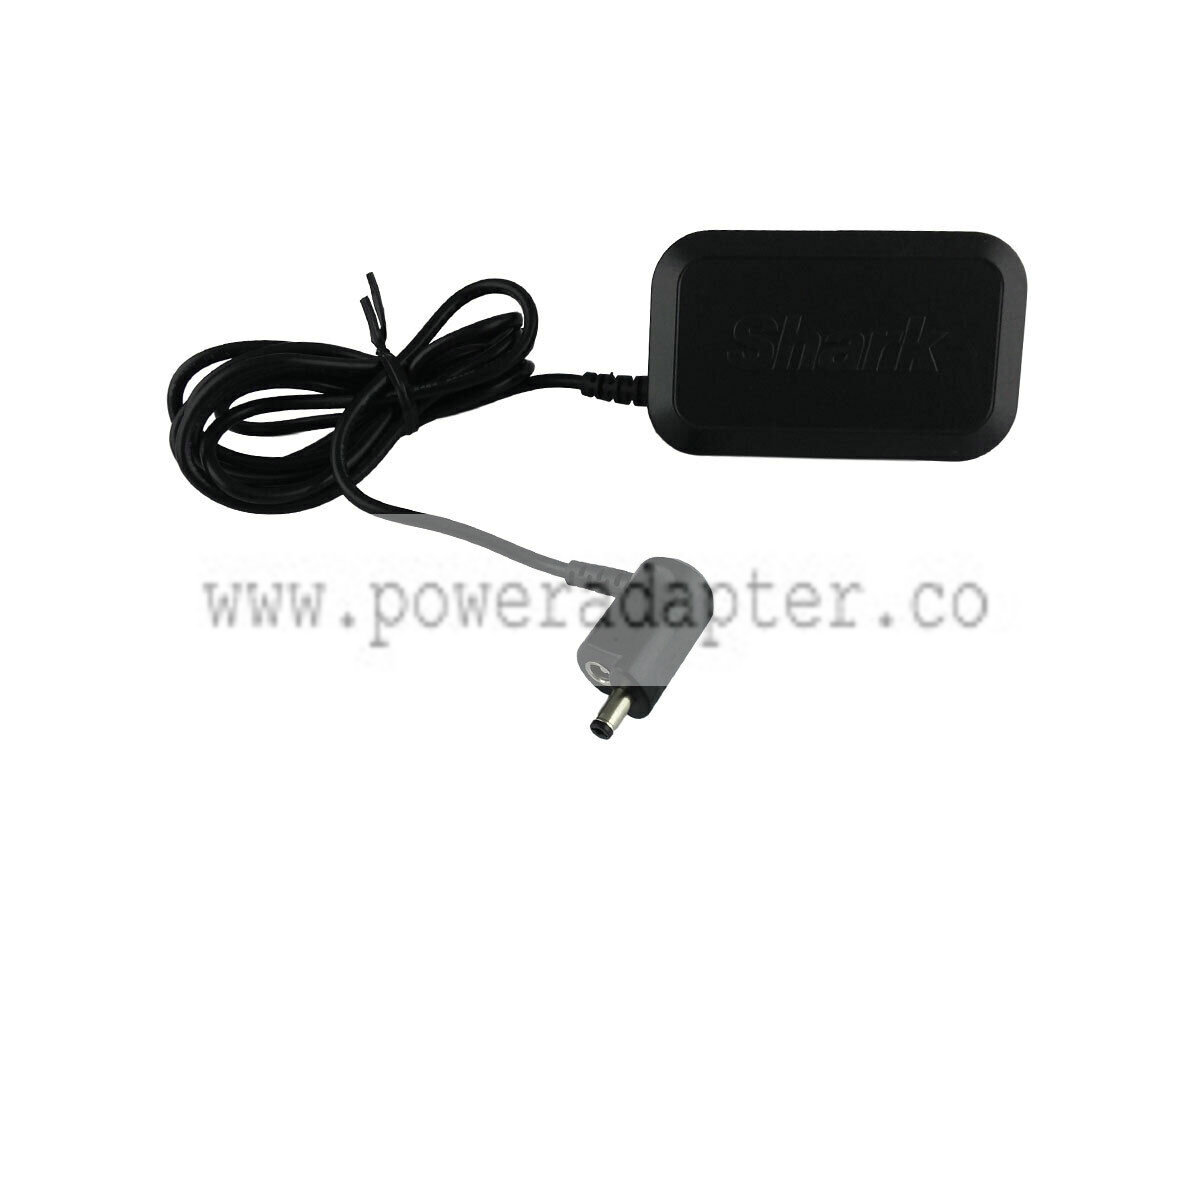 Original SHARK YLS0483A-T2880802 Power Adapter Cable Cord Box Adaptor input:100-240v 50-60hz 1.6a output: 28.8v 800ma